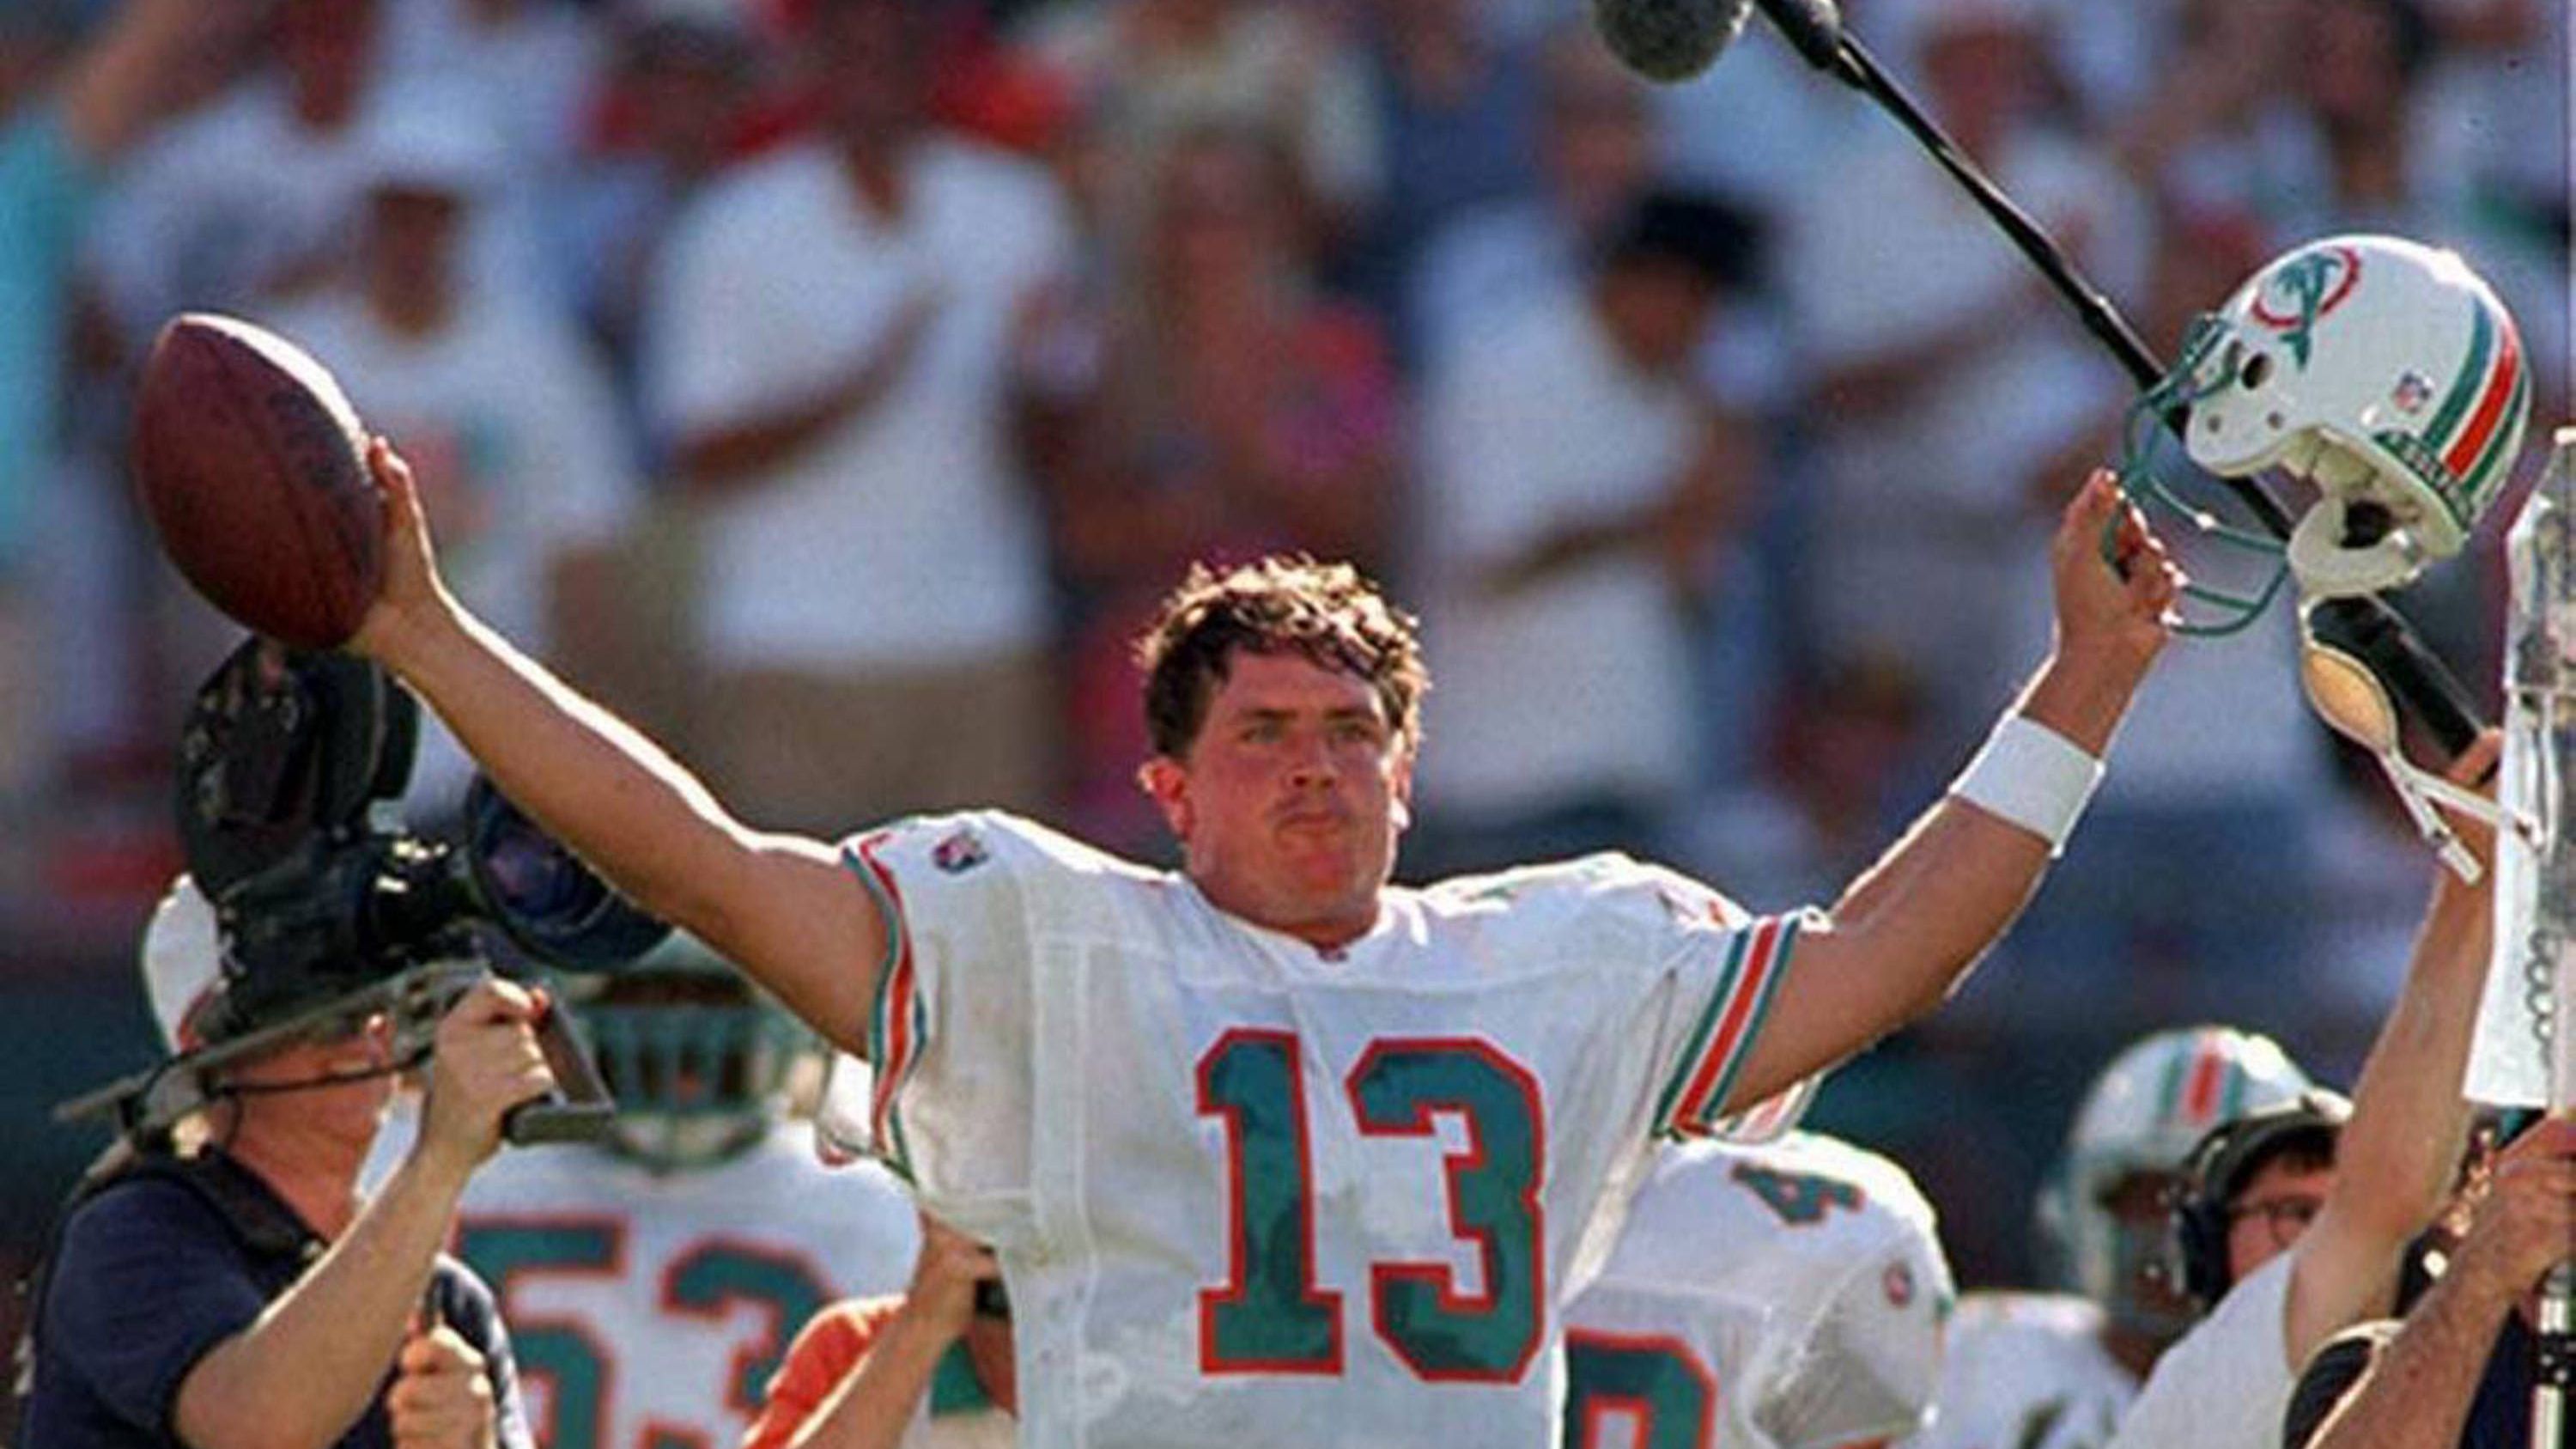 <strong>13: Dan Marino</strong><br>Team: Miami Dolphins<br>Position: Quarterback<br>Erfolge: Pro Football Hall of Famer, 1984 NFL MVP<br>Honorable Mention: Kurt Warner